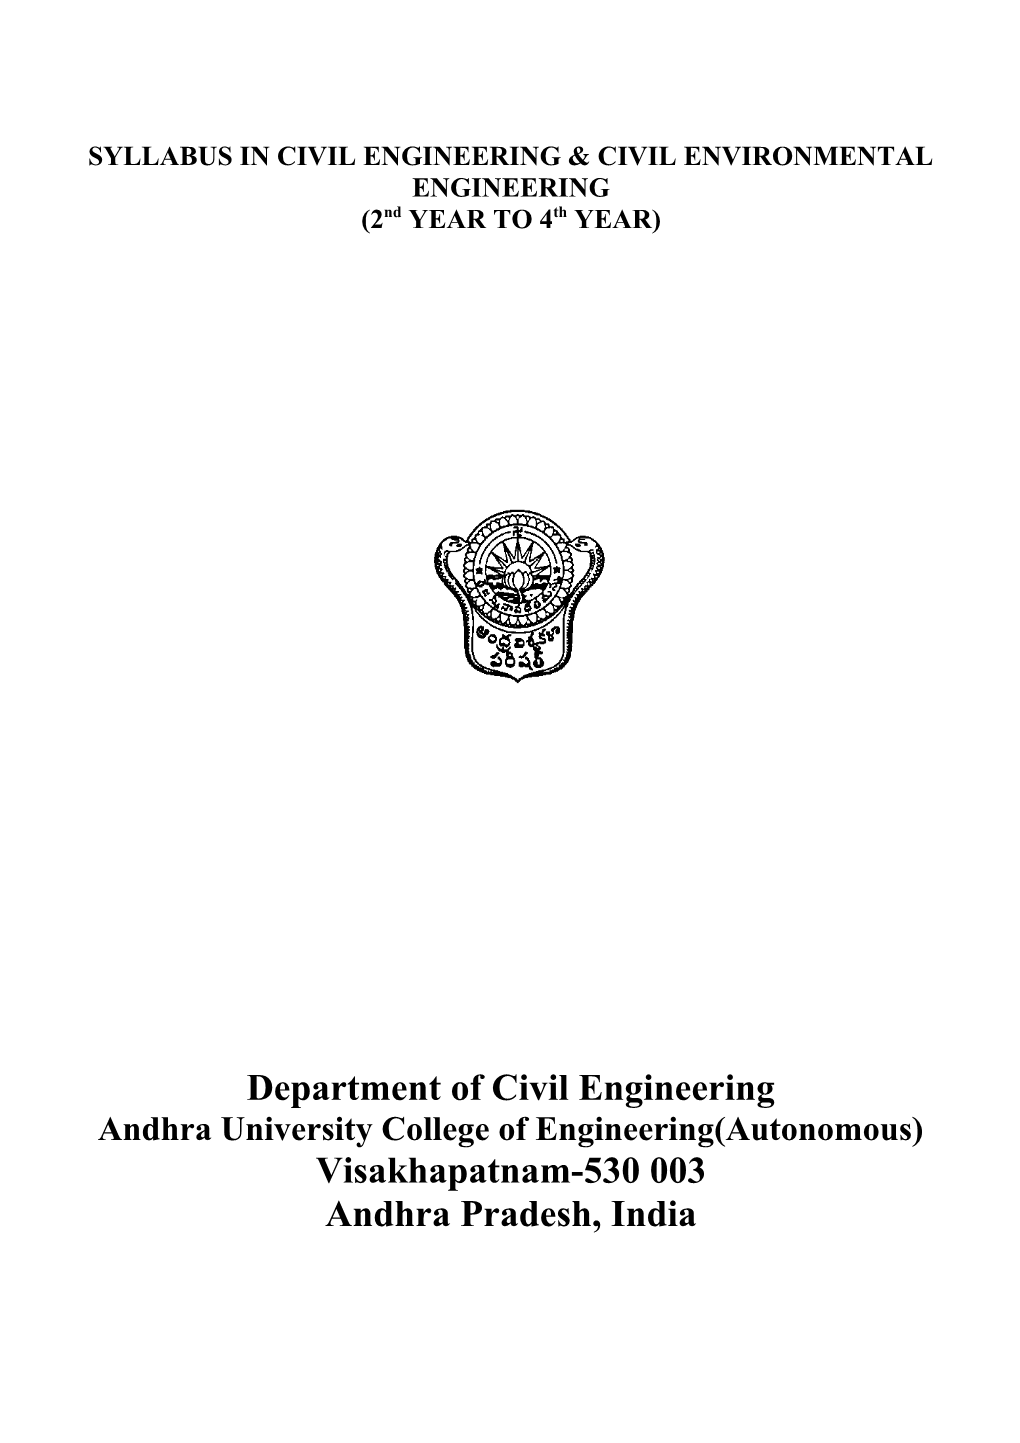 Syllabus in Civil Engineering & Civil Environmental Engineering